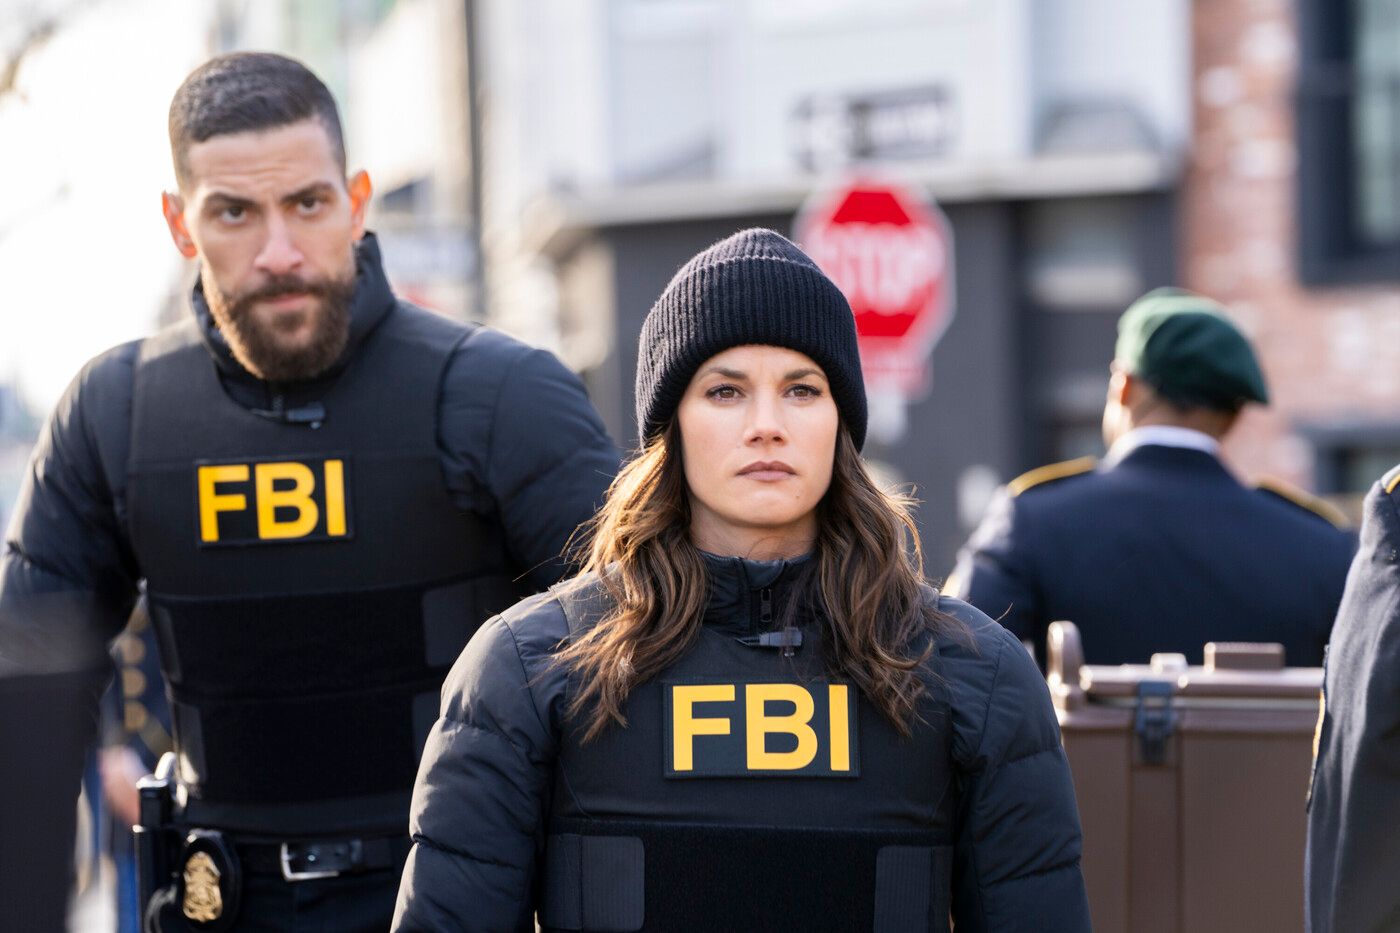 OA (actor Zeeko Zaki) walks behind Maggie (Missy Peregrym) in FBI vests in FBI